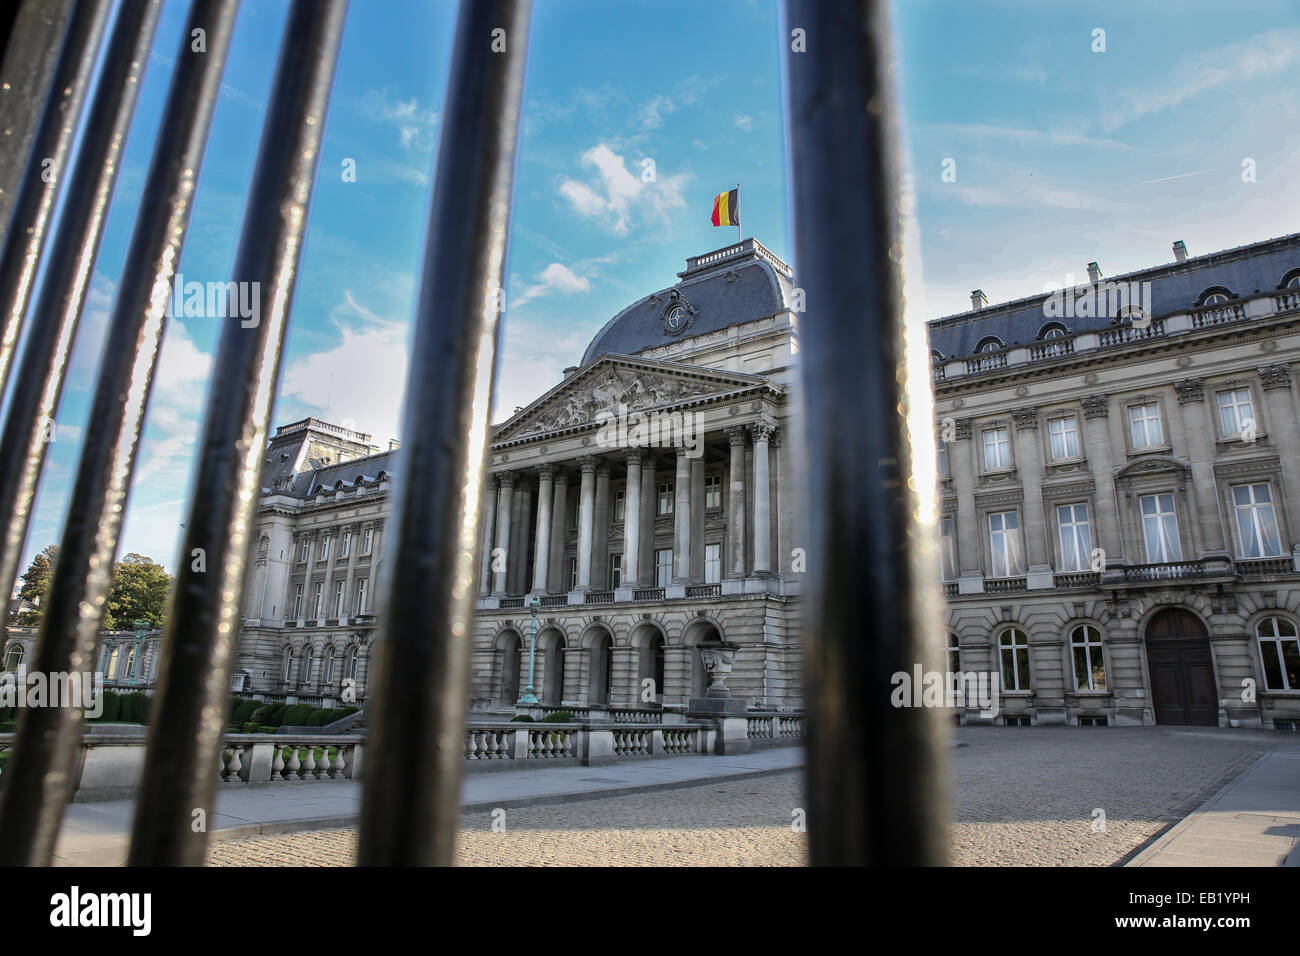 Palacio Real de Bruselas bruxelles benelux clásico europeo emblemático edificio histórico Foto de stock